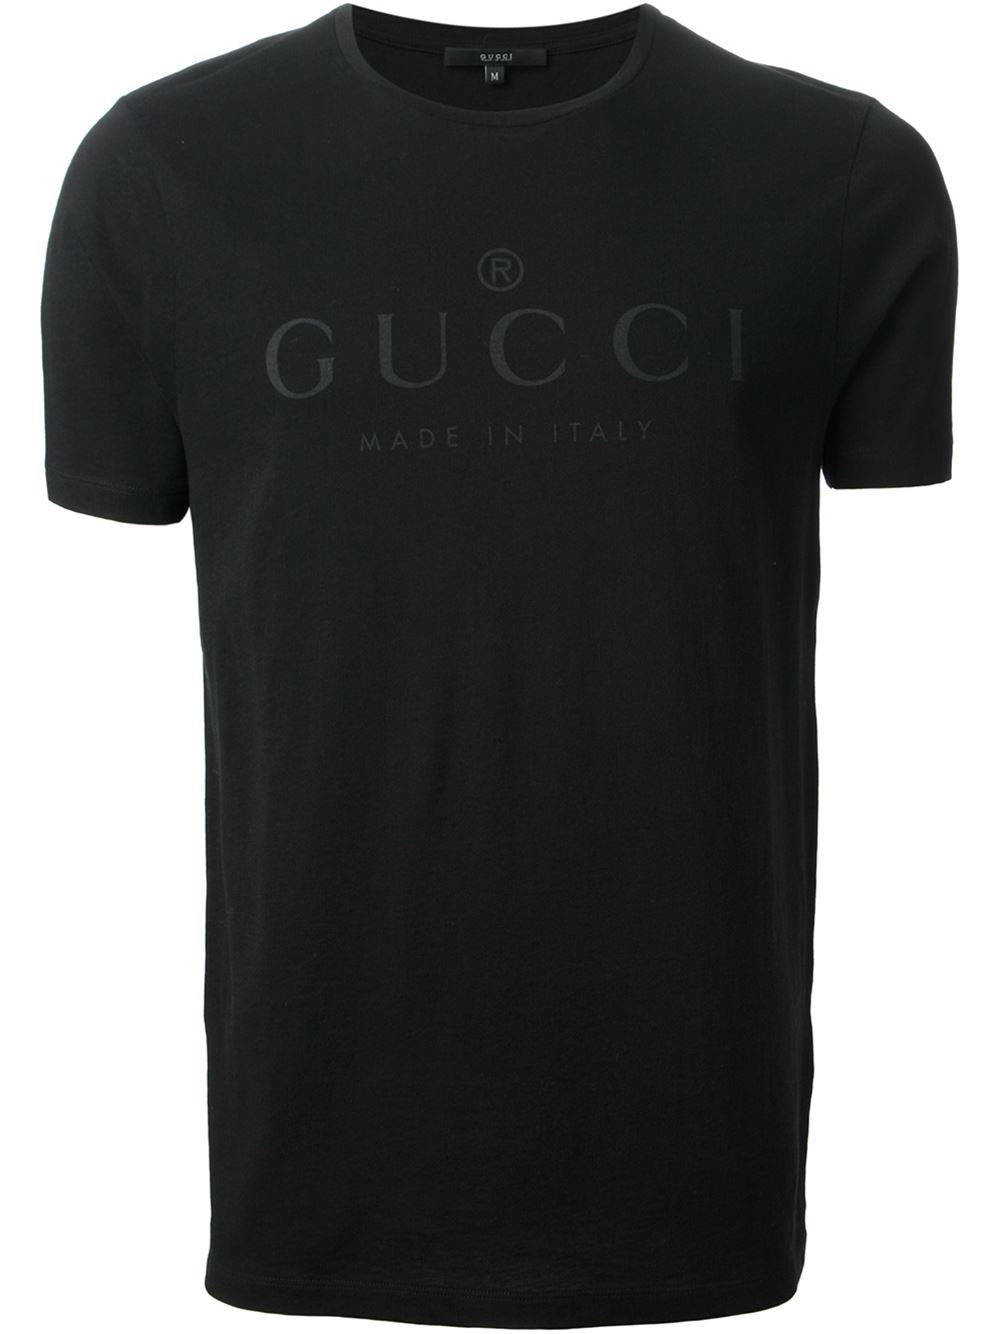 Gucci Logo Print in Black for Men - Lyst